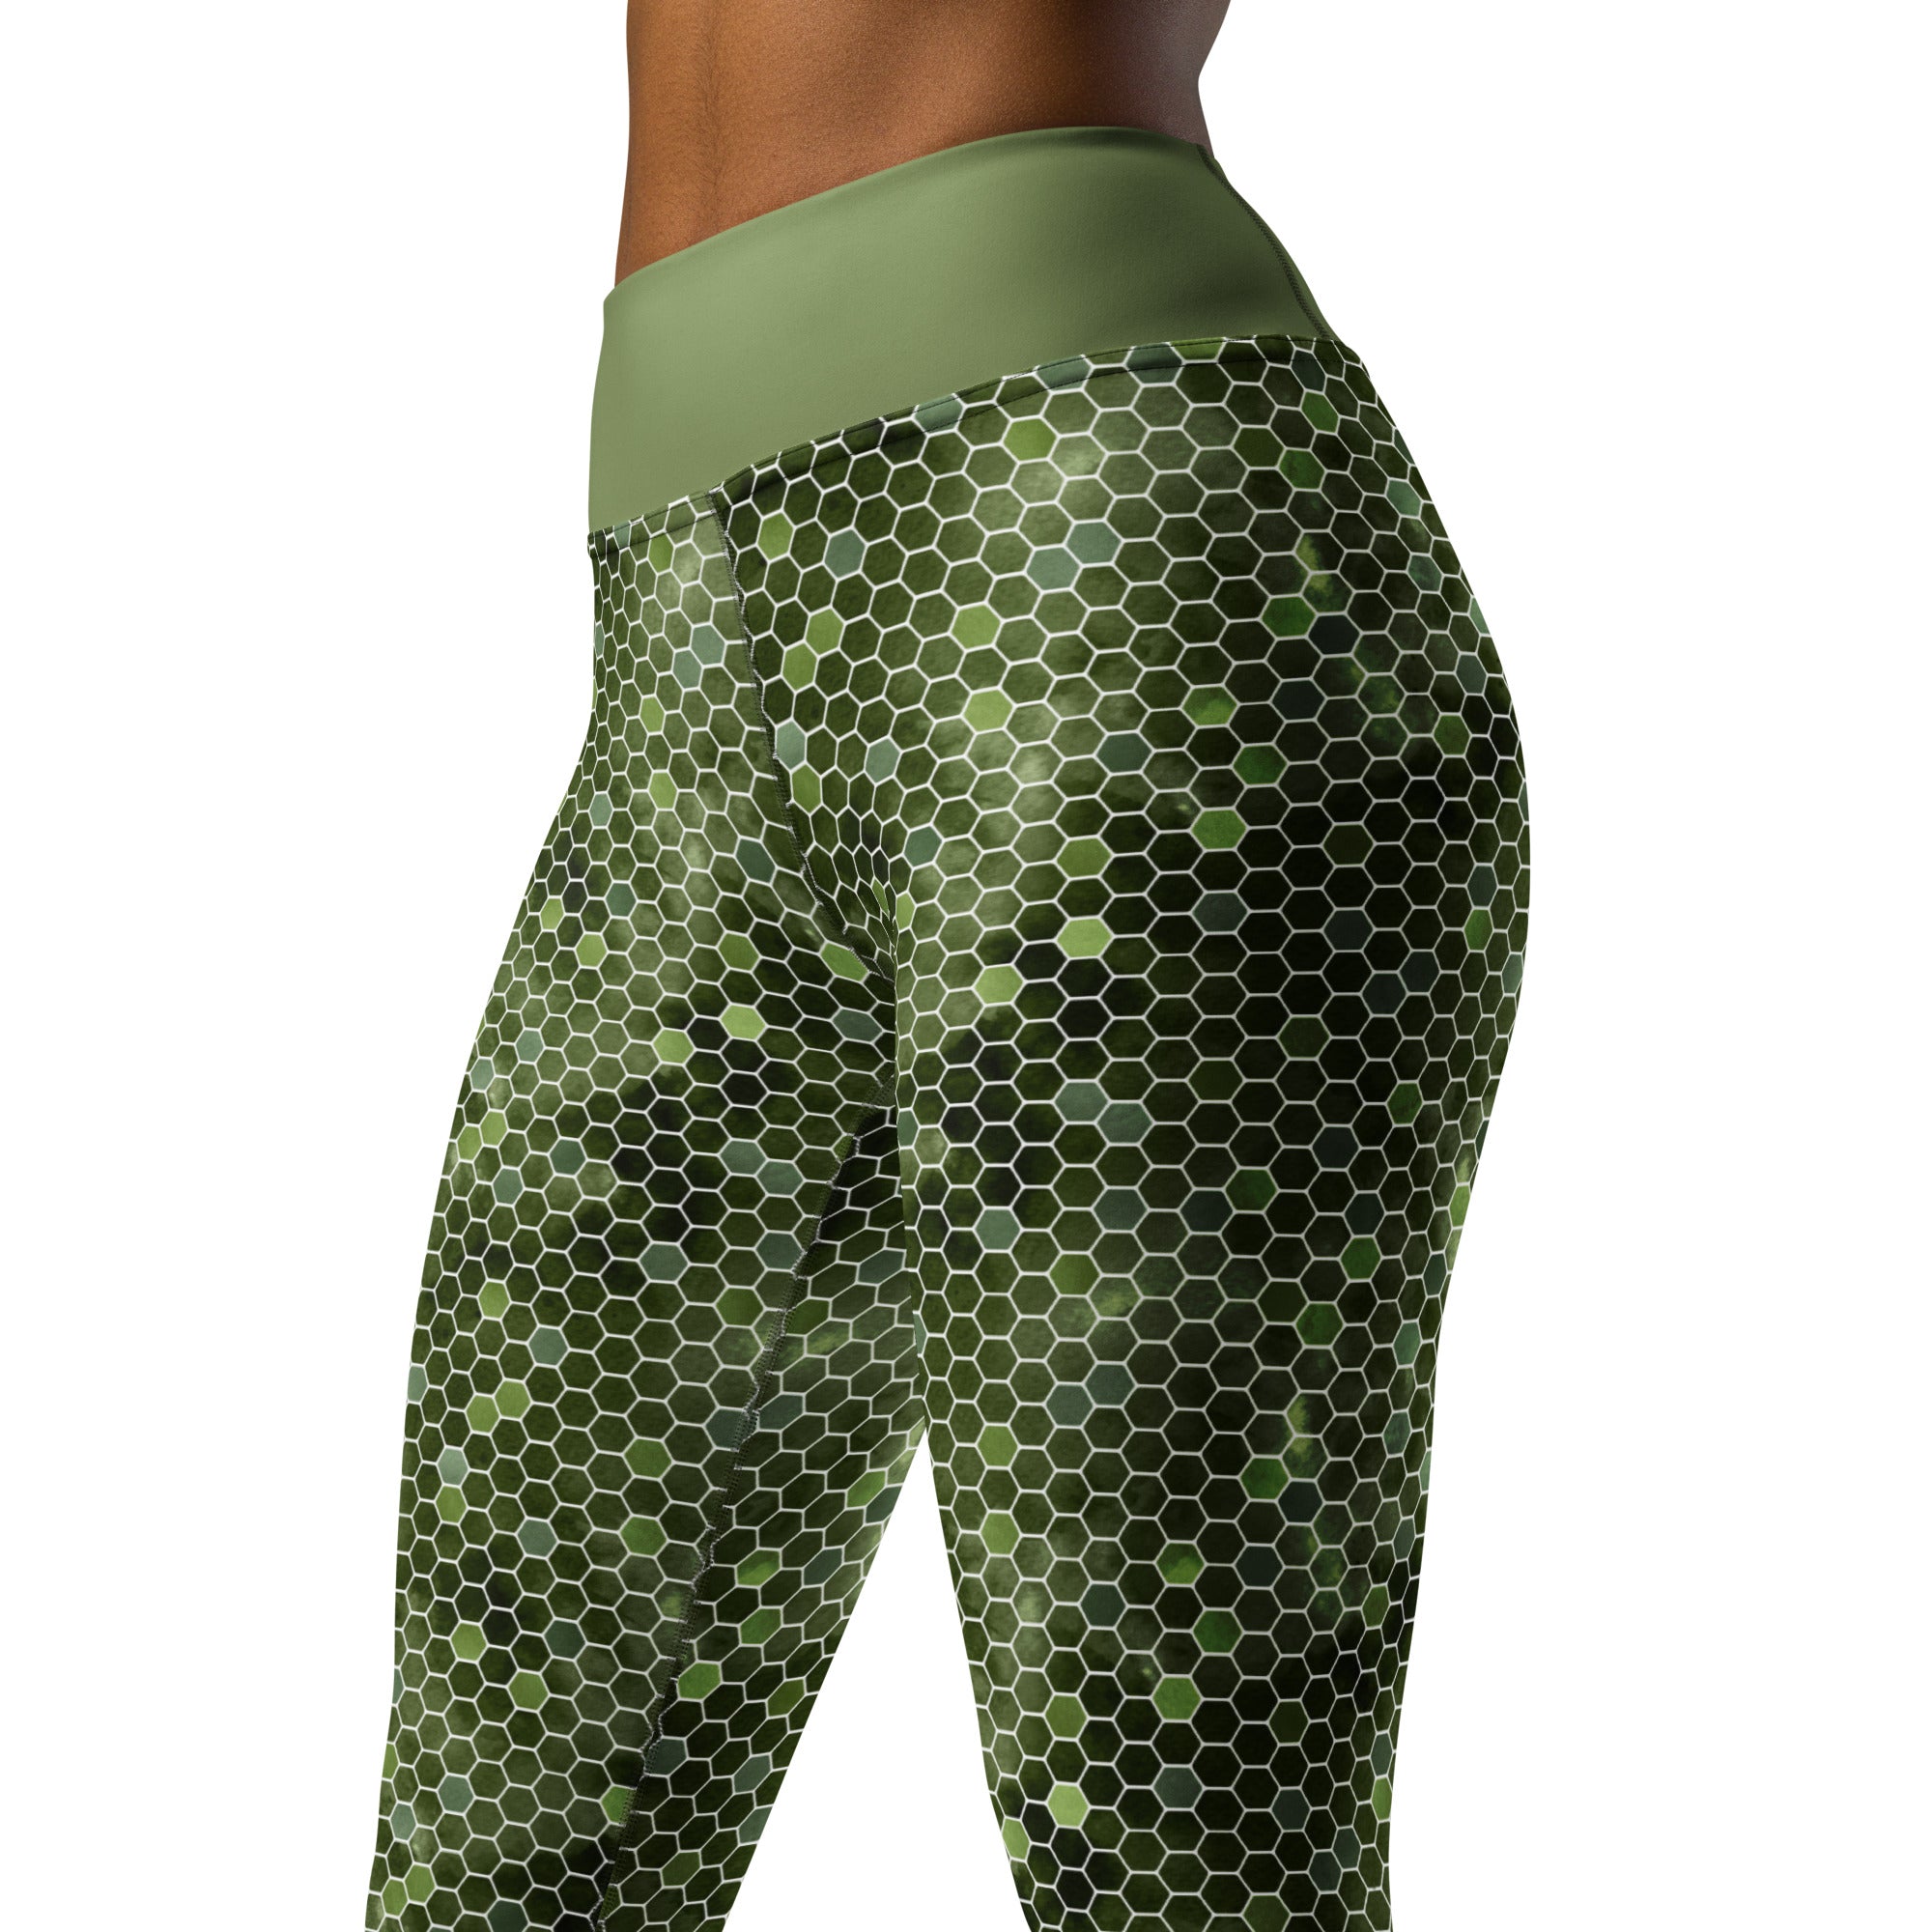 Yoga Leggings- Honeycomb Green